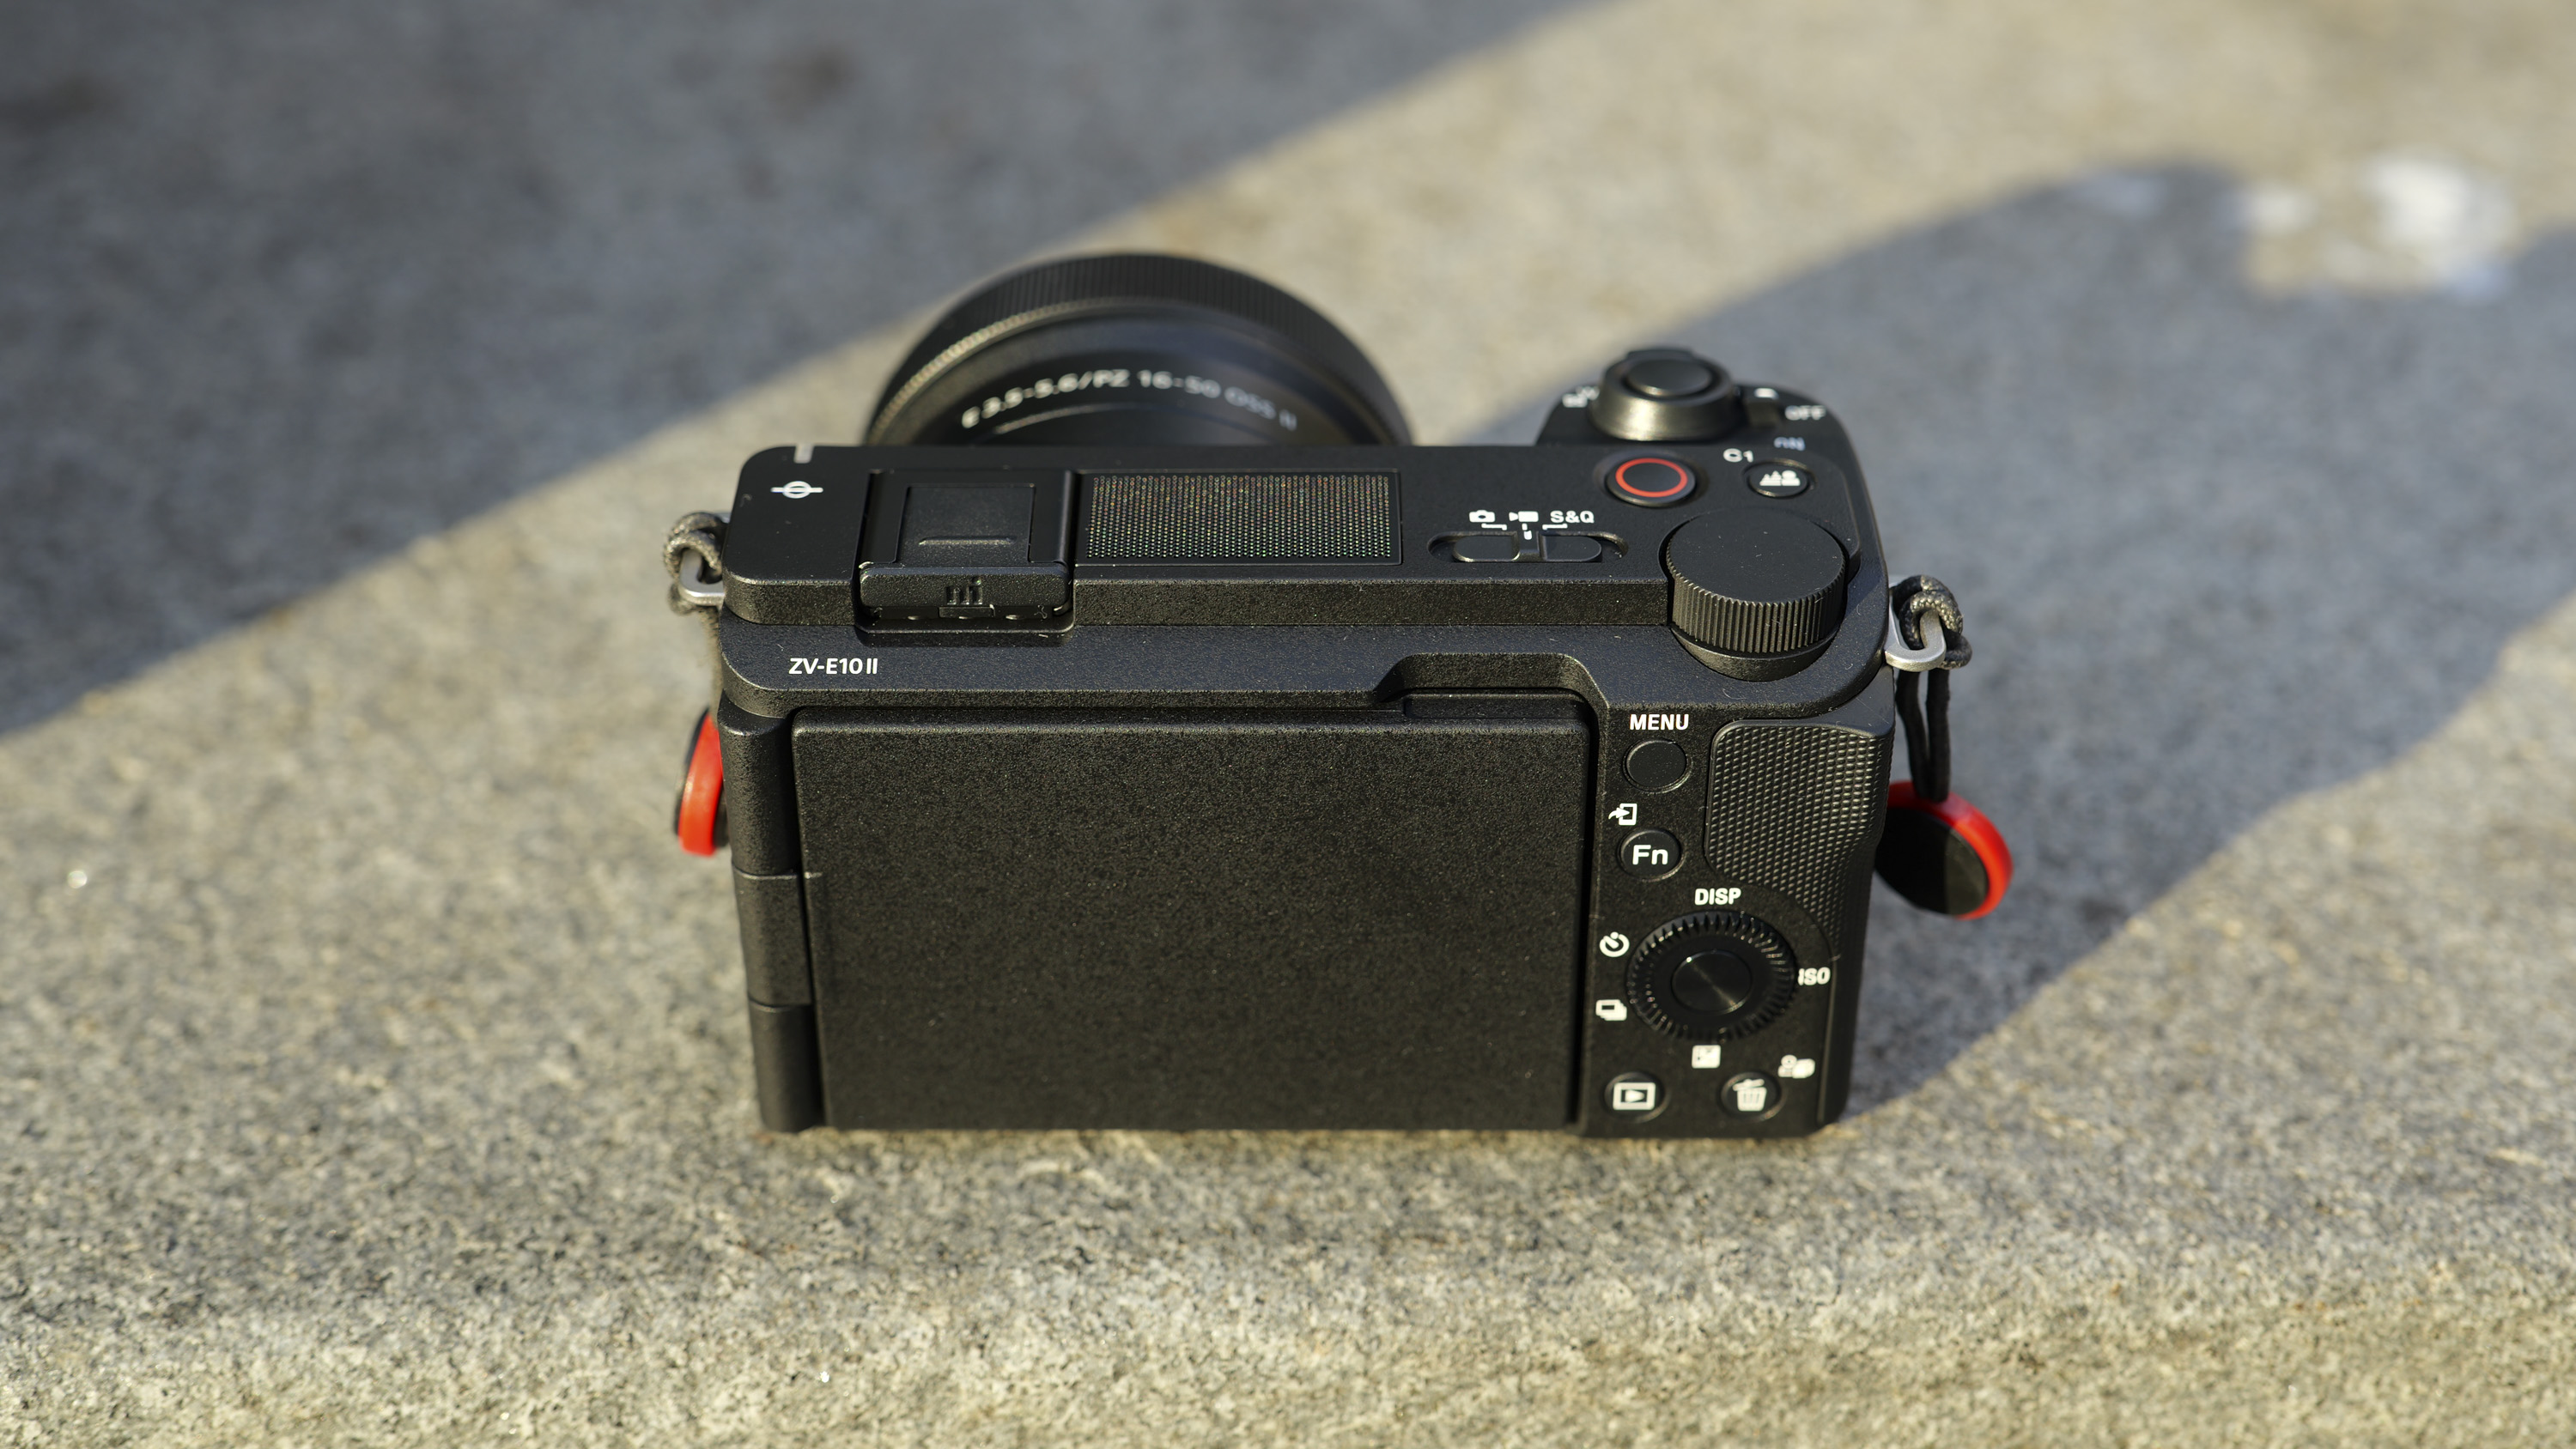 Sony ZV-E10 II camera on a stone surface